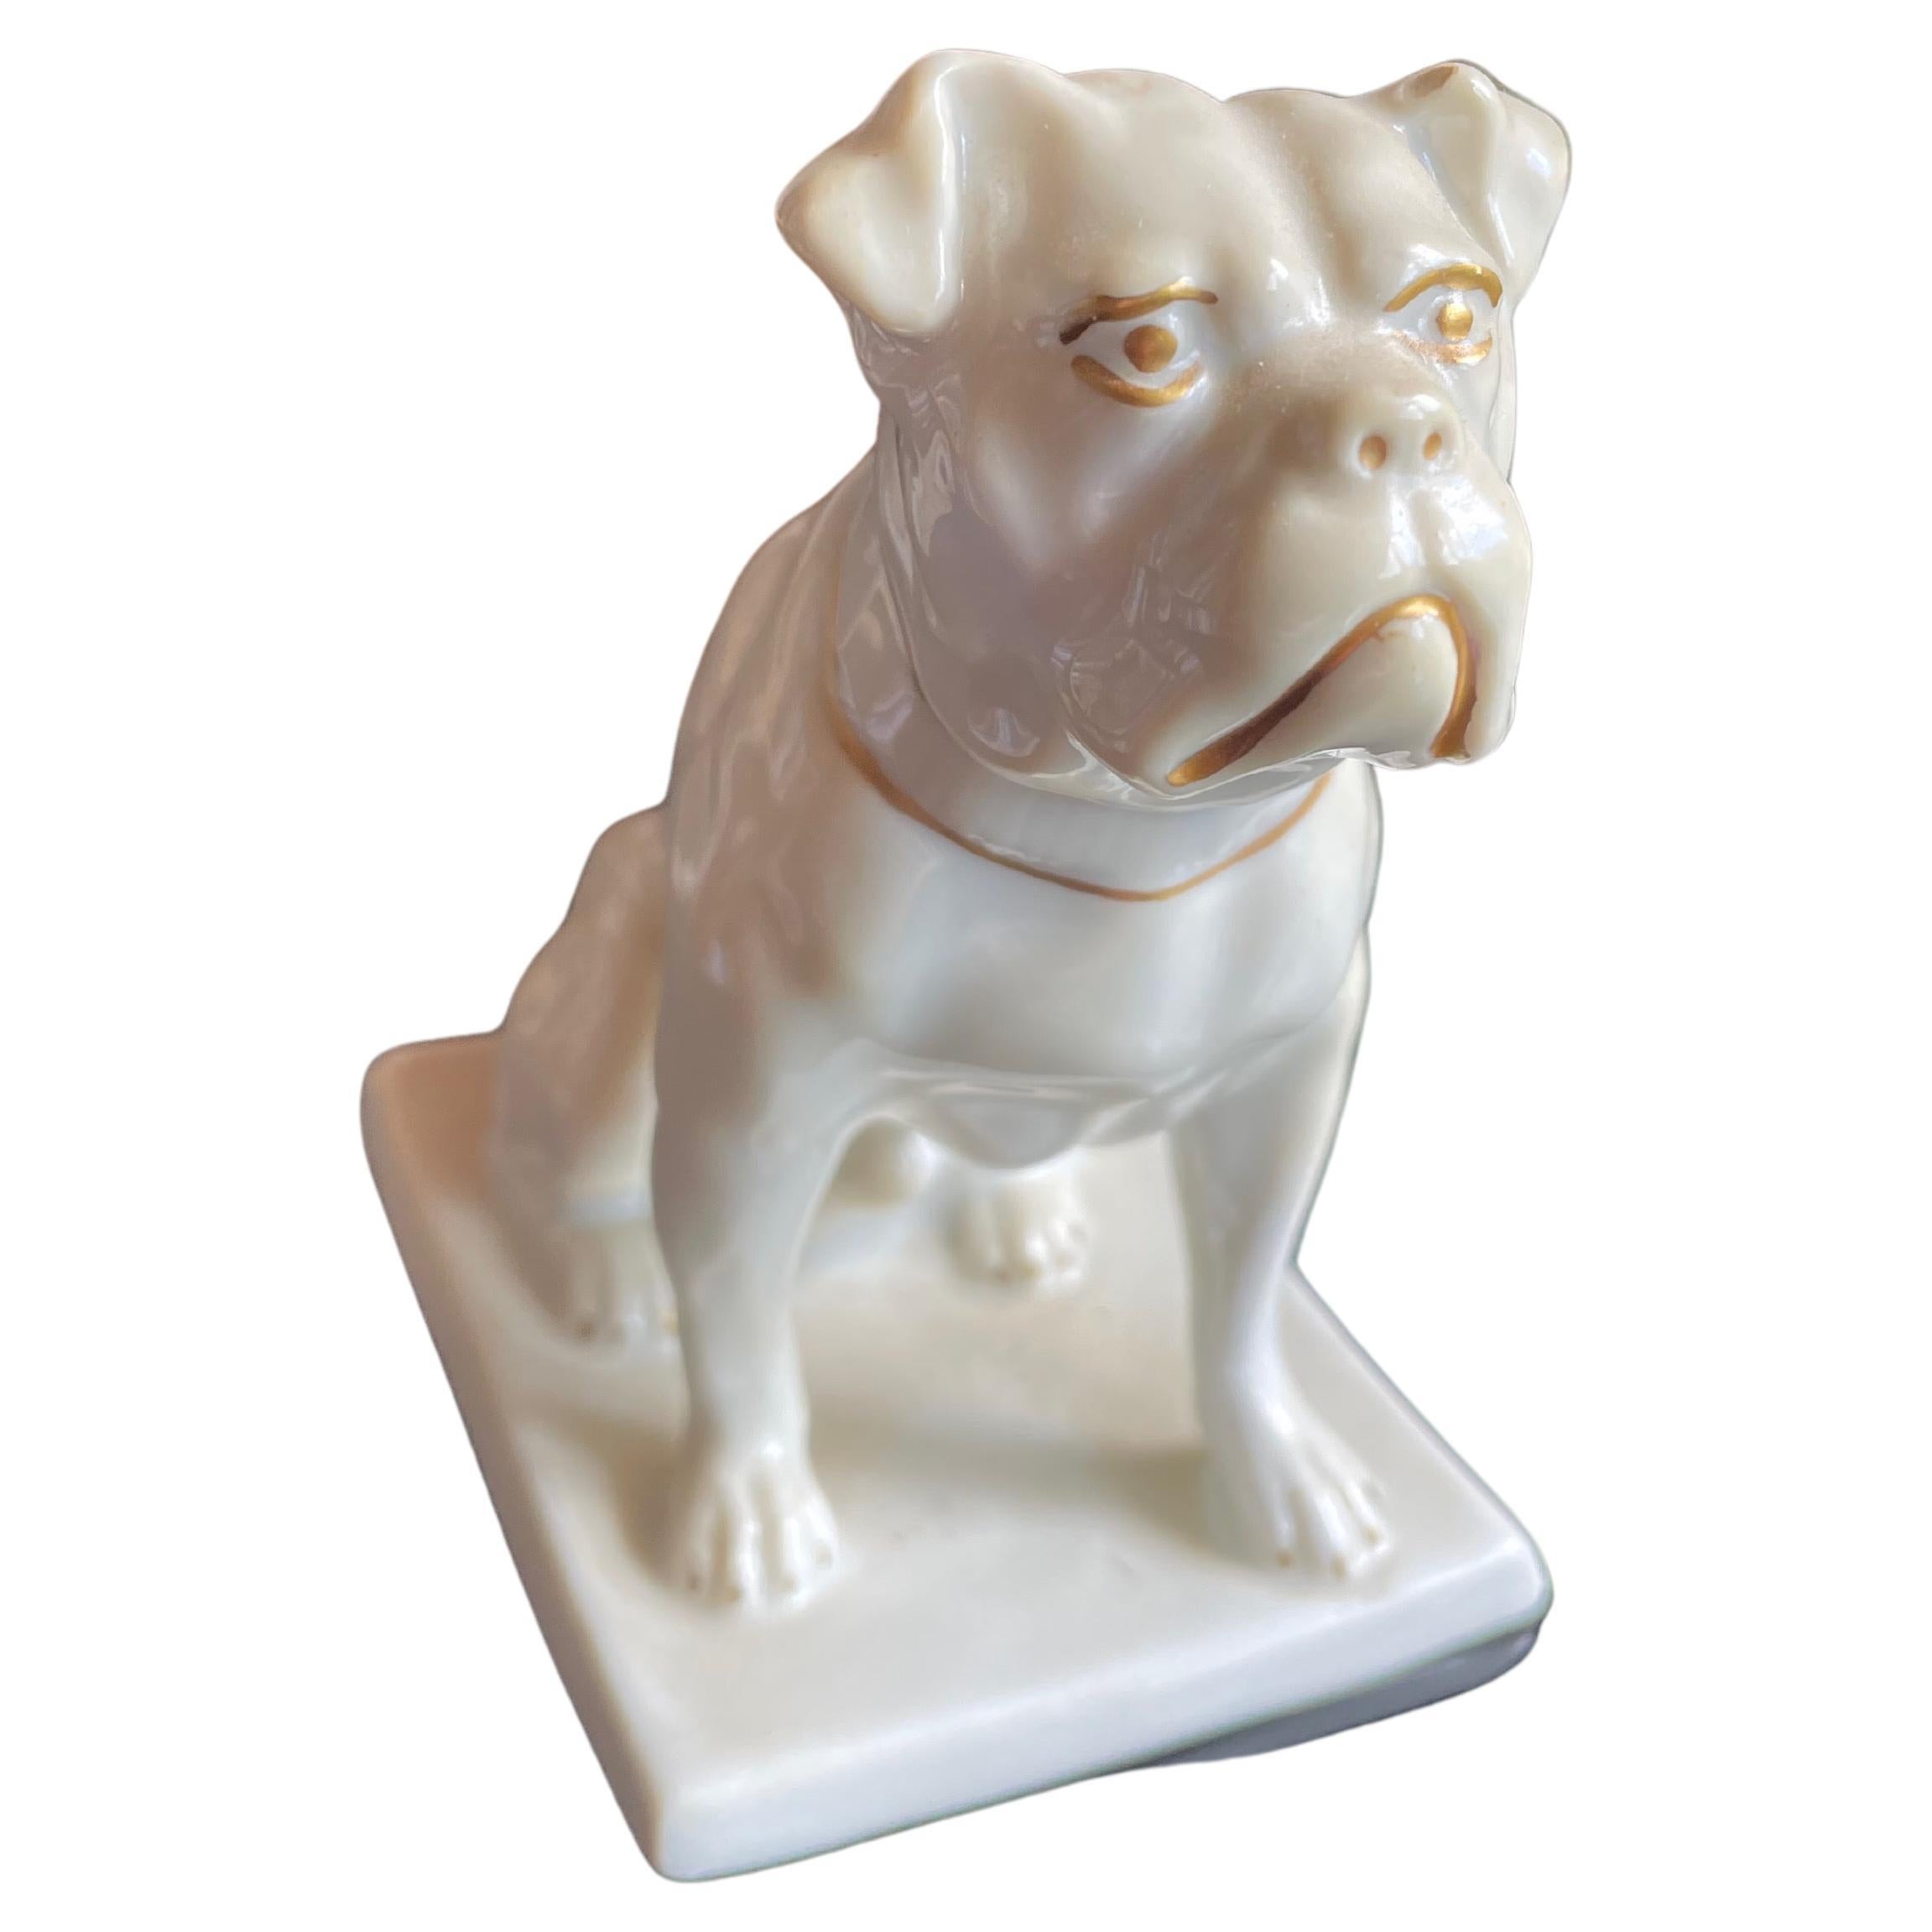 Art Déco porcelain figurine" Sitting bulldog" . Germany 1920s. Signed.